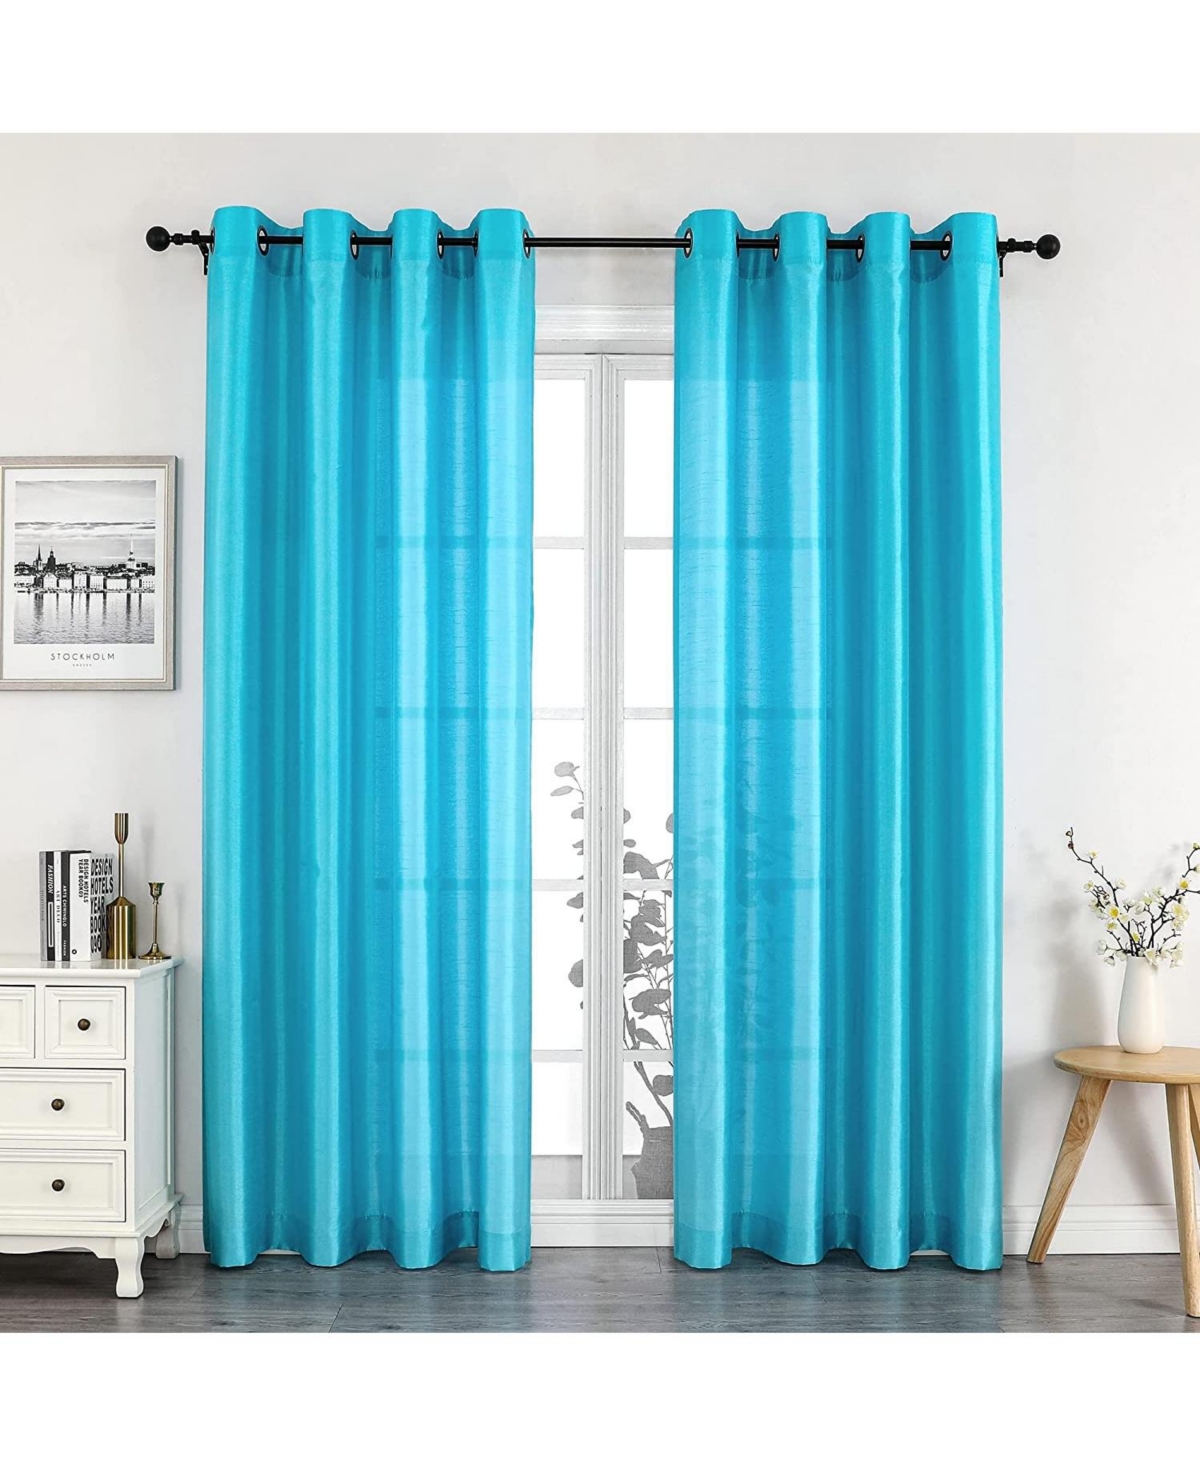 Montauk Accents 2 Piece Turquoise Blue Lightweight Sheer Grommet Top Window Curtain Panels - Blue